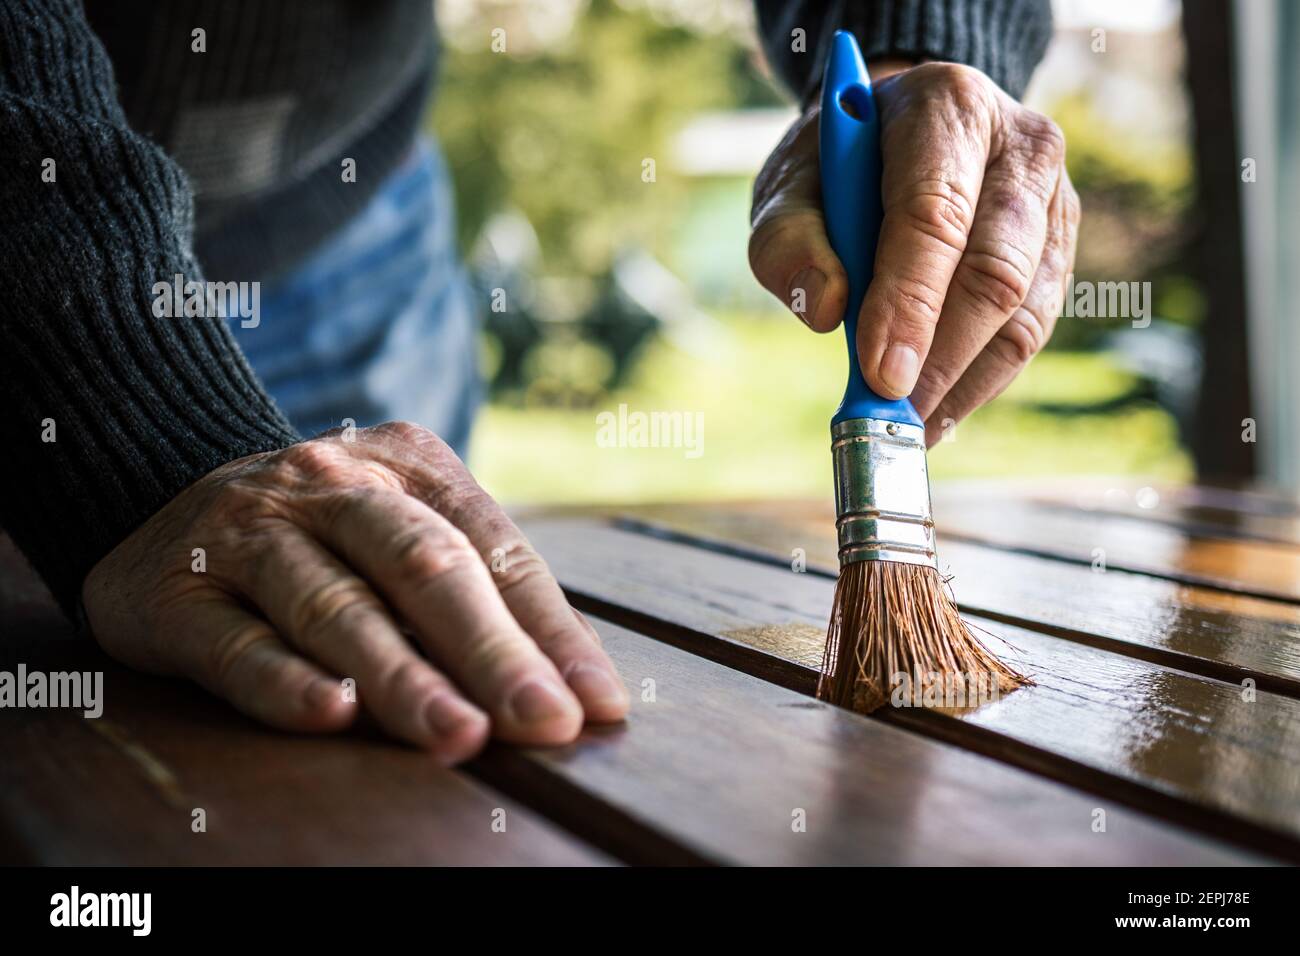 https://c8.alamy.com/comp/2EPJ78E/senior-man-painting-wooden-table-renovation-of-garden-furniture-close-up-hand-with-paintbrush-craftsman-is-restoring-furniture-outdoors-2EPJ78E.jpg